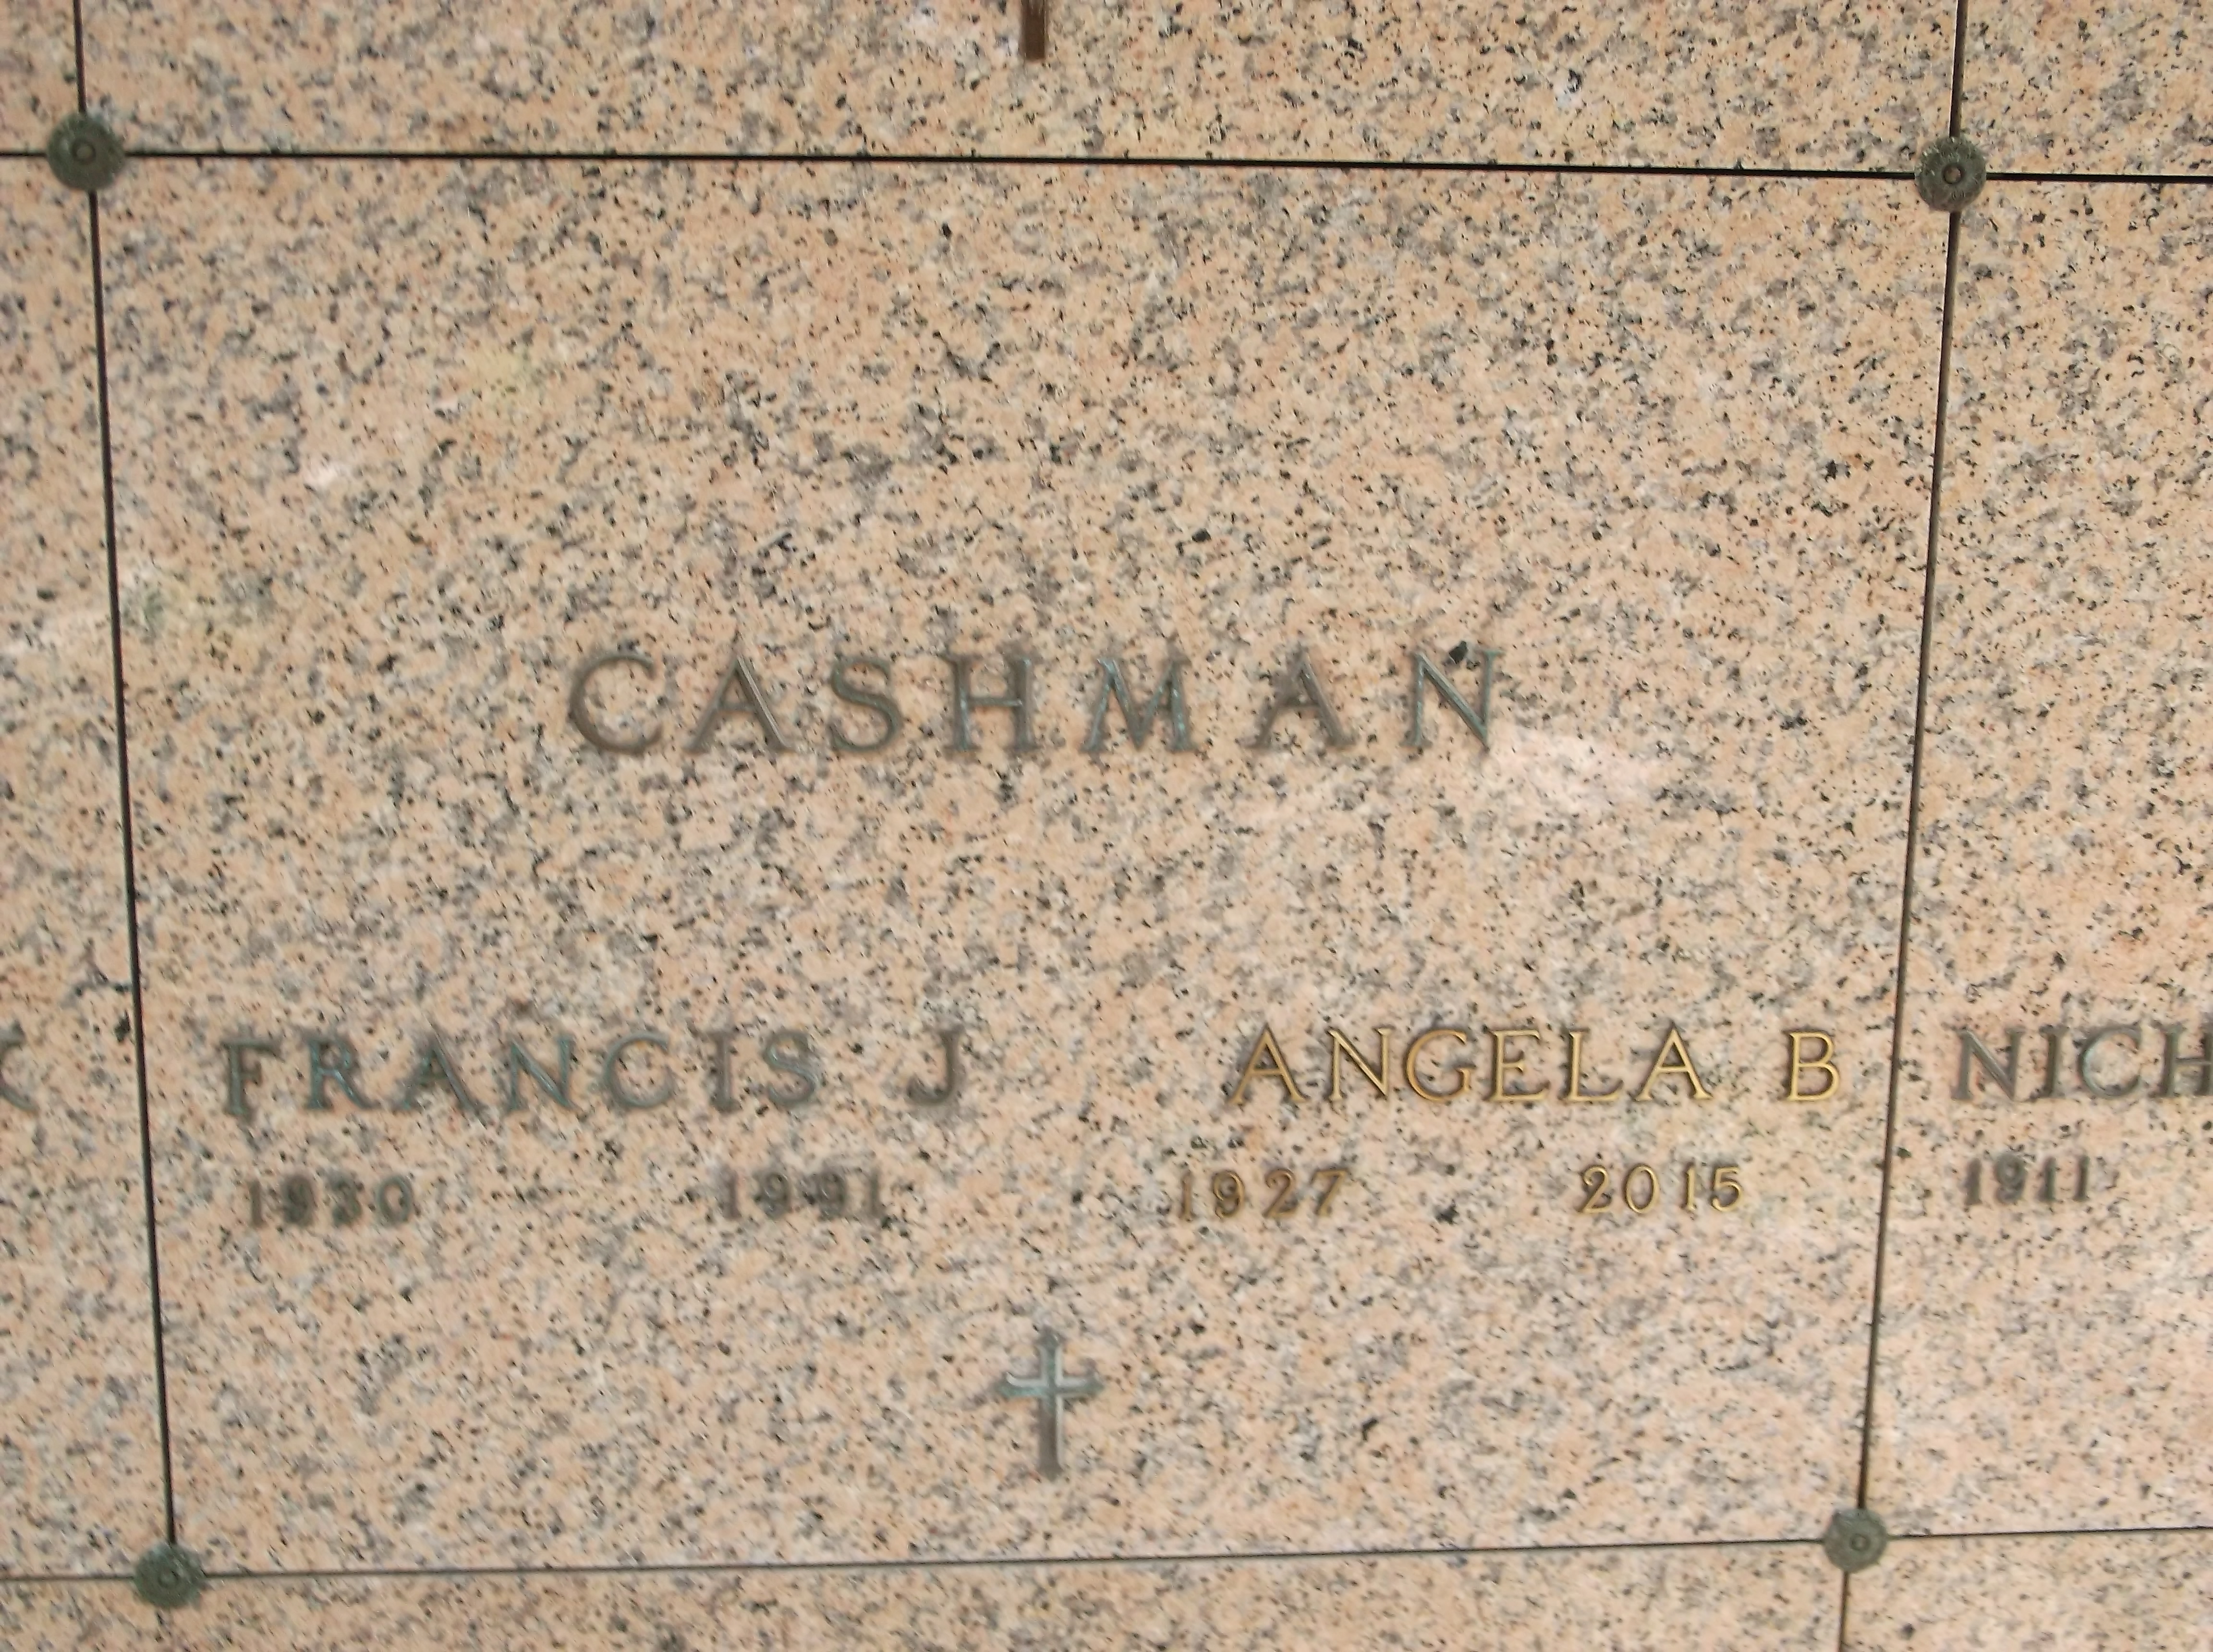 Angela B Cashman